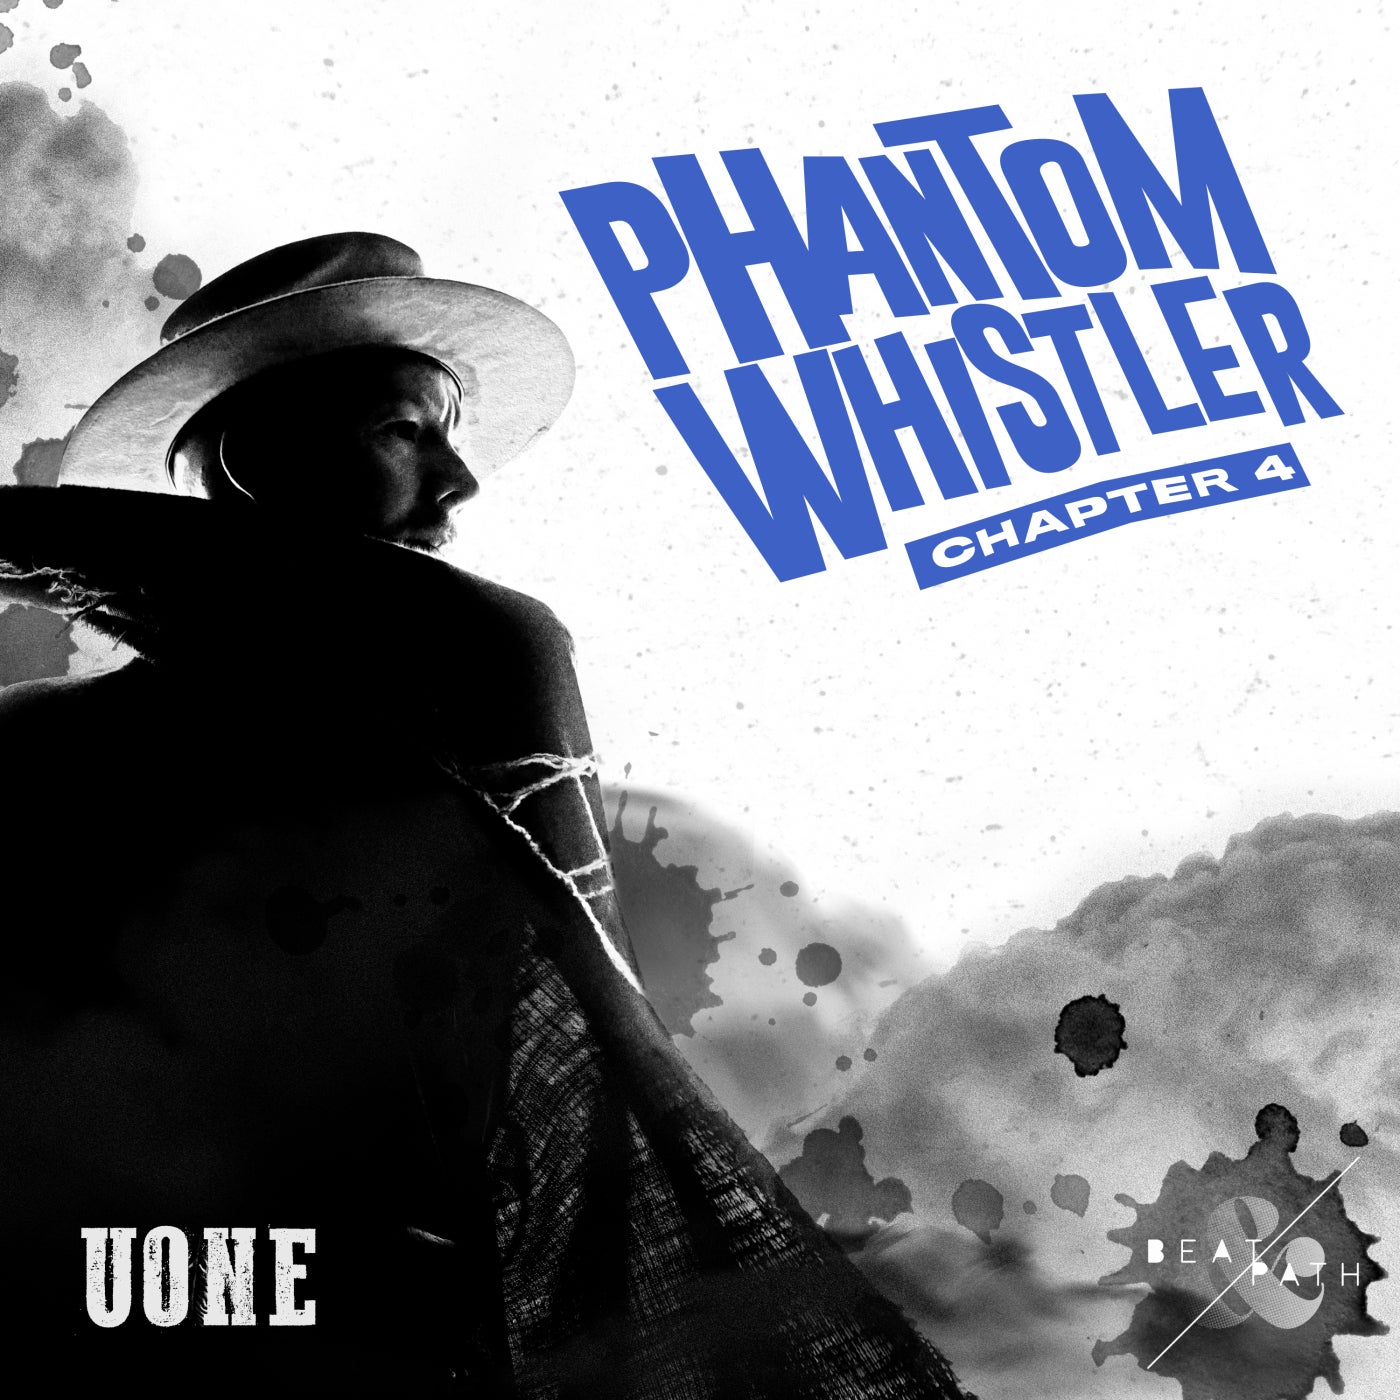 Uone - Phantom Whistler - Chapter 4 [Beat & Path]